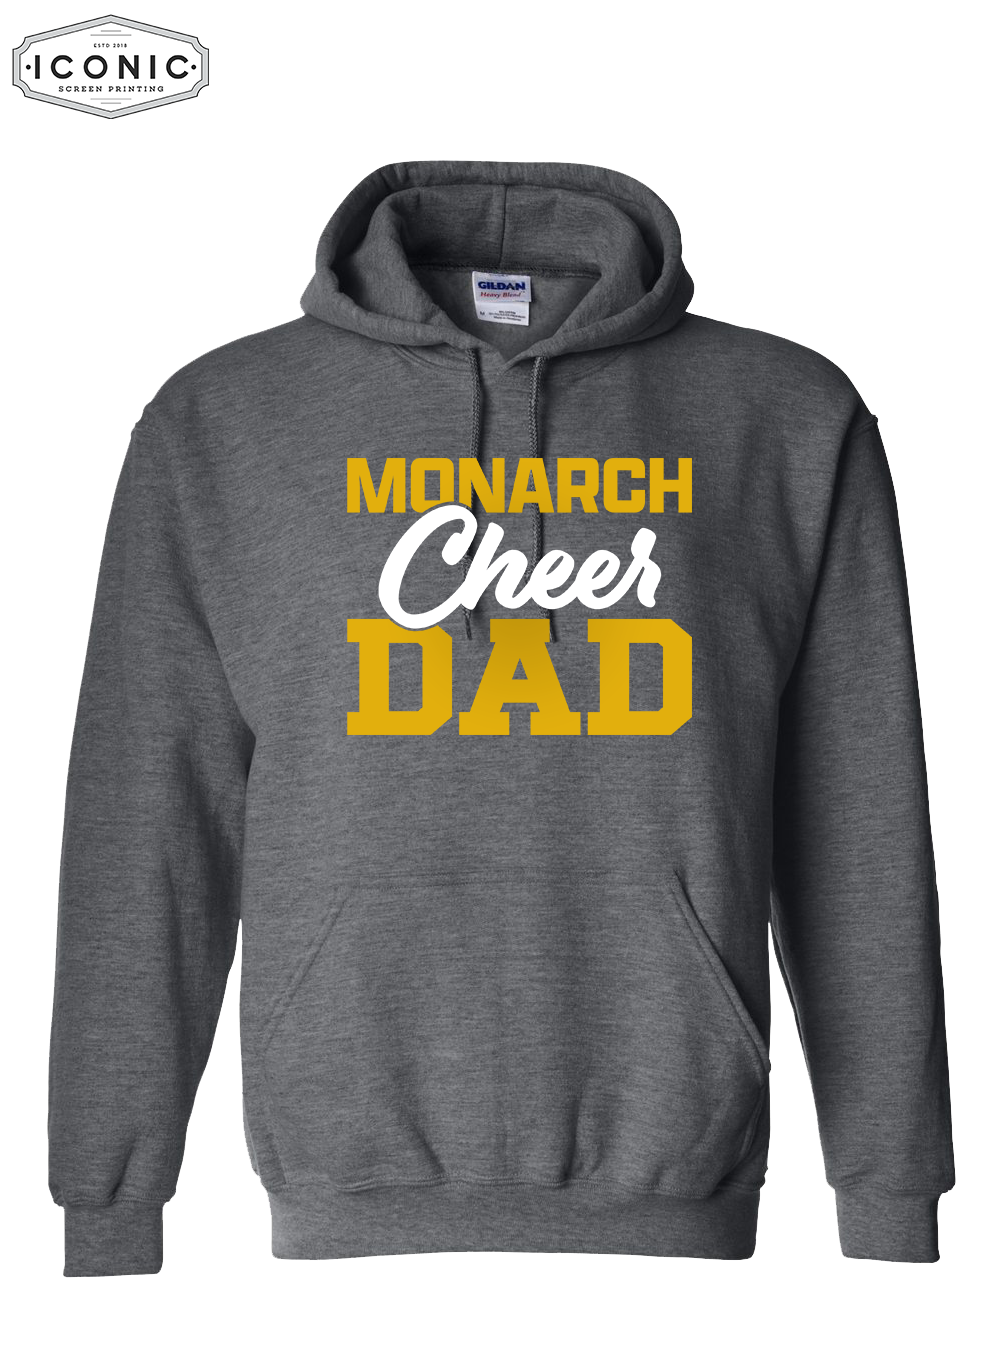 Cheer Dad - Heavy Blend Hooded Sweatshirt